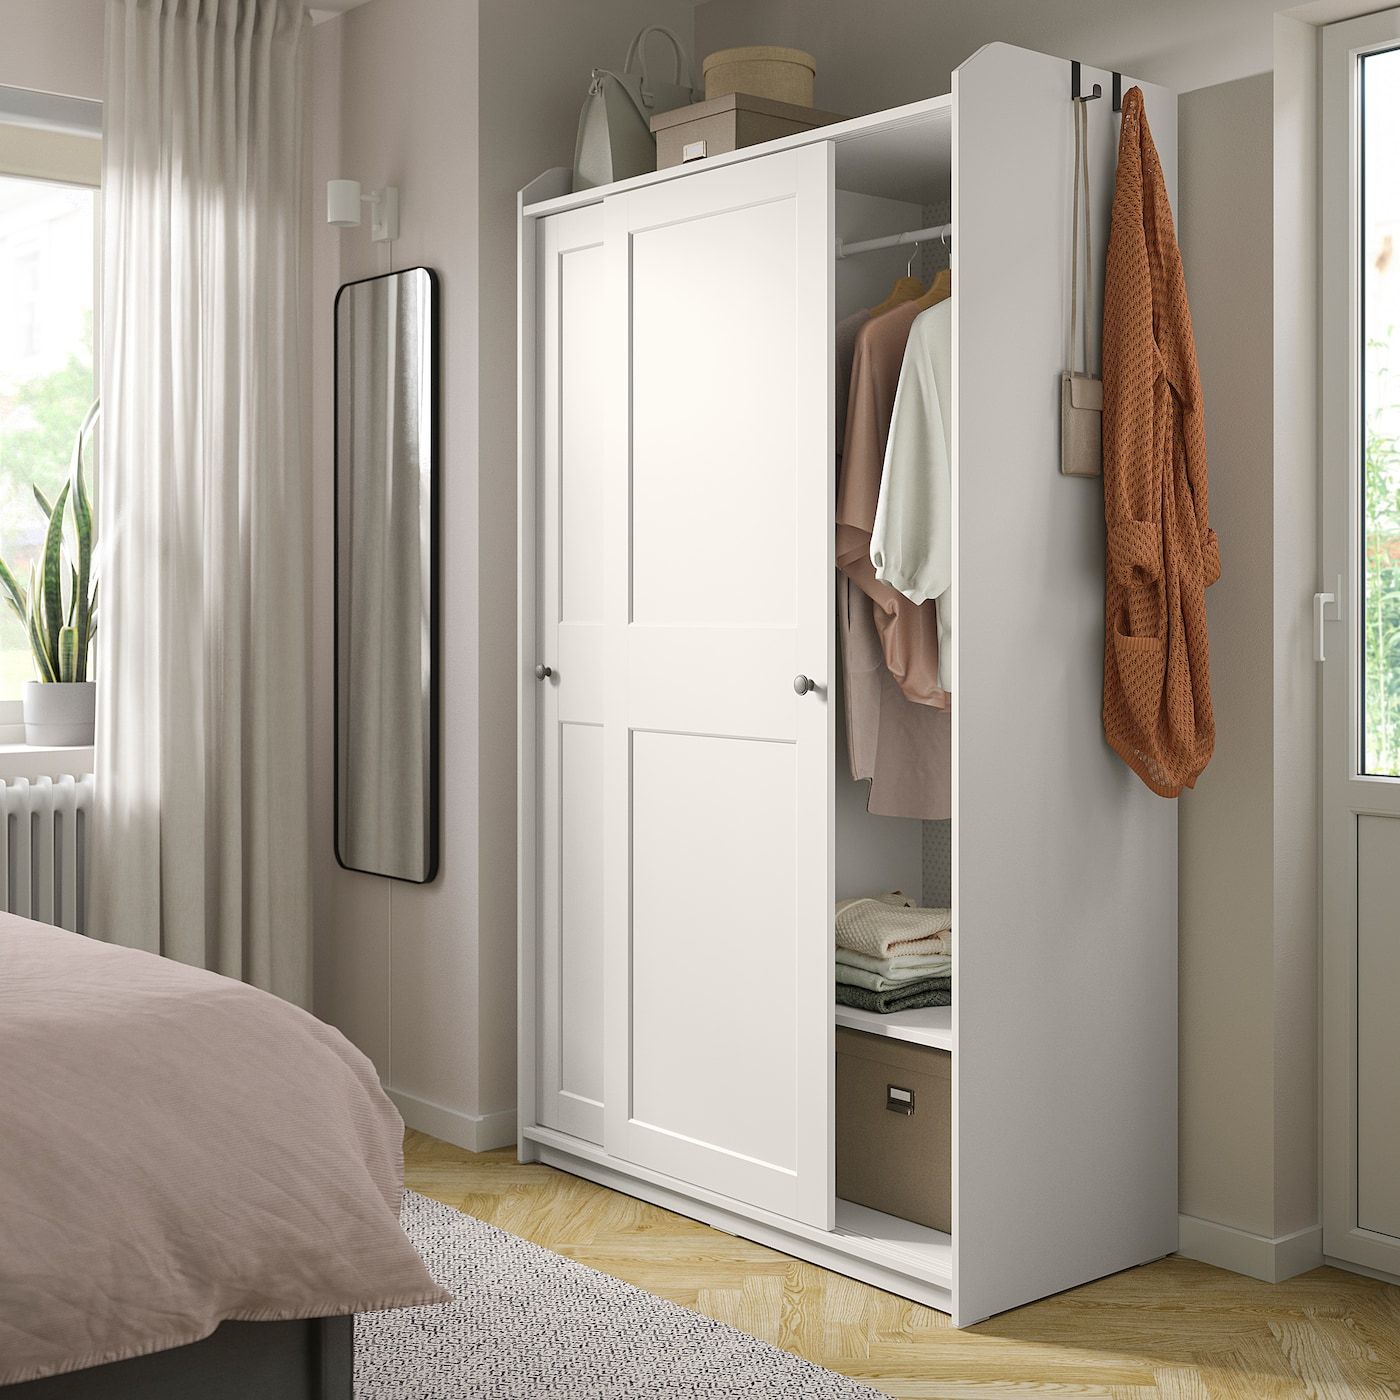 Hauga Wardrobe With Sliding Doors, White, 118x55x199 Cm – Ikea With Sliding Door Wardrobes (Photo 6 of 15)